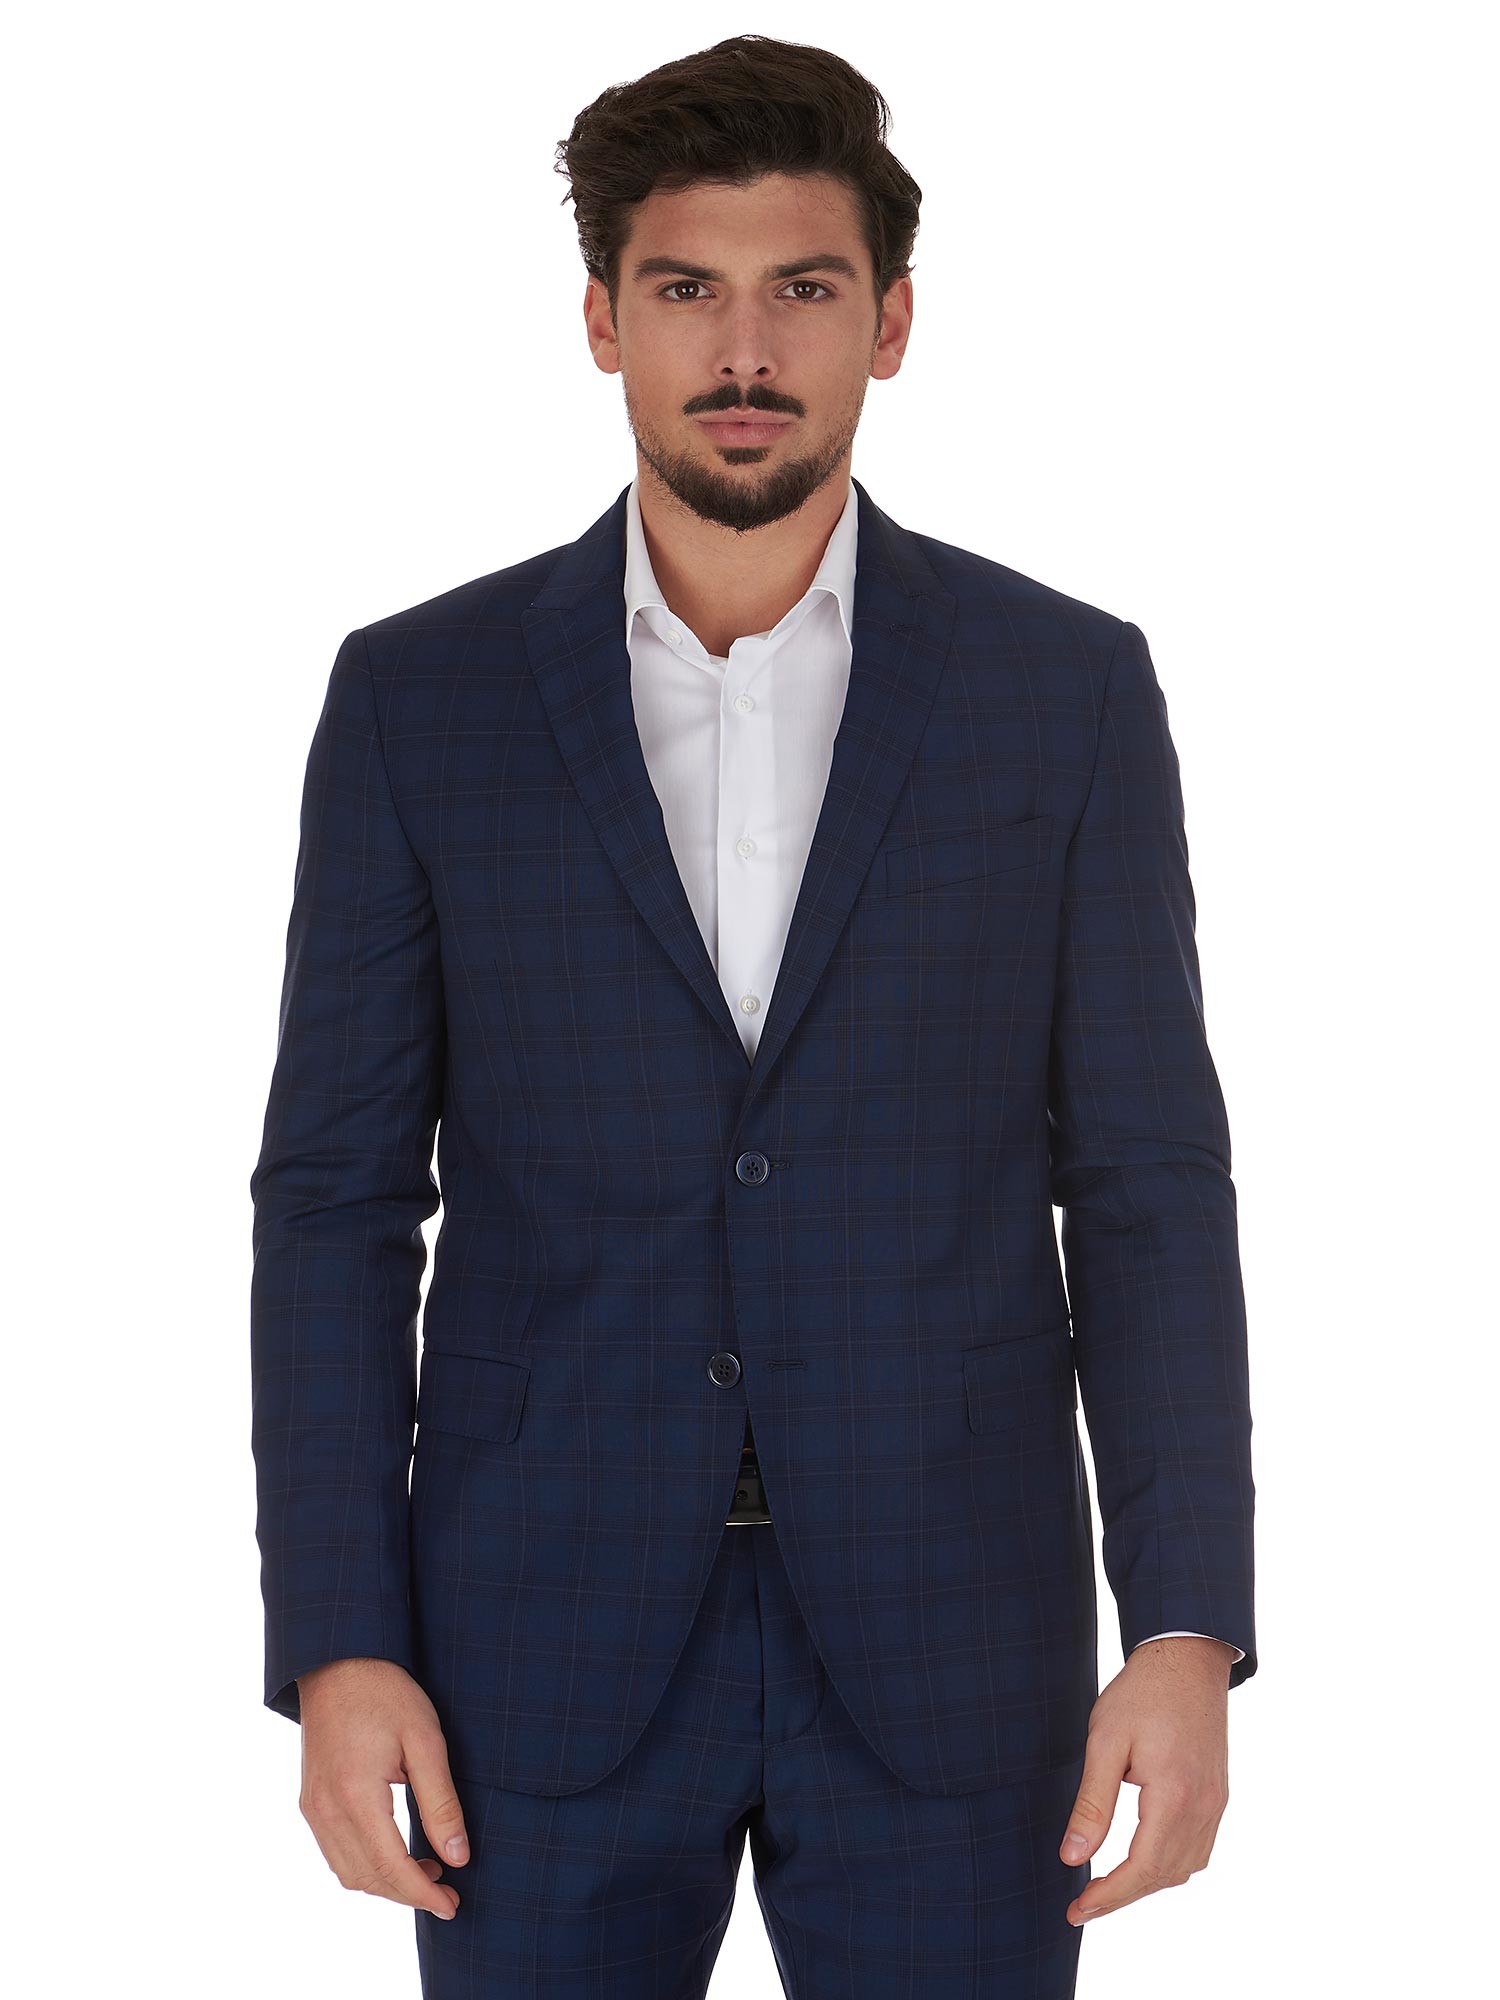 Sarti Toscani - Prince of Wales blue suit